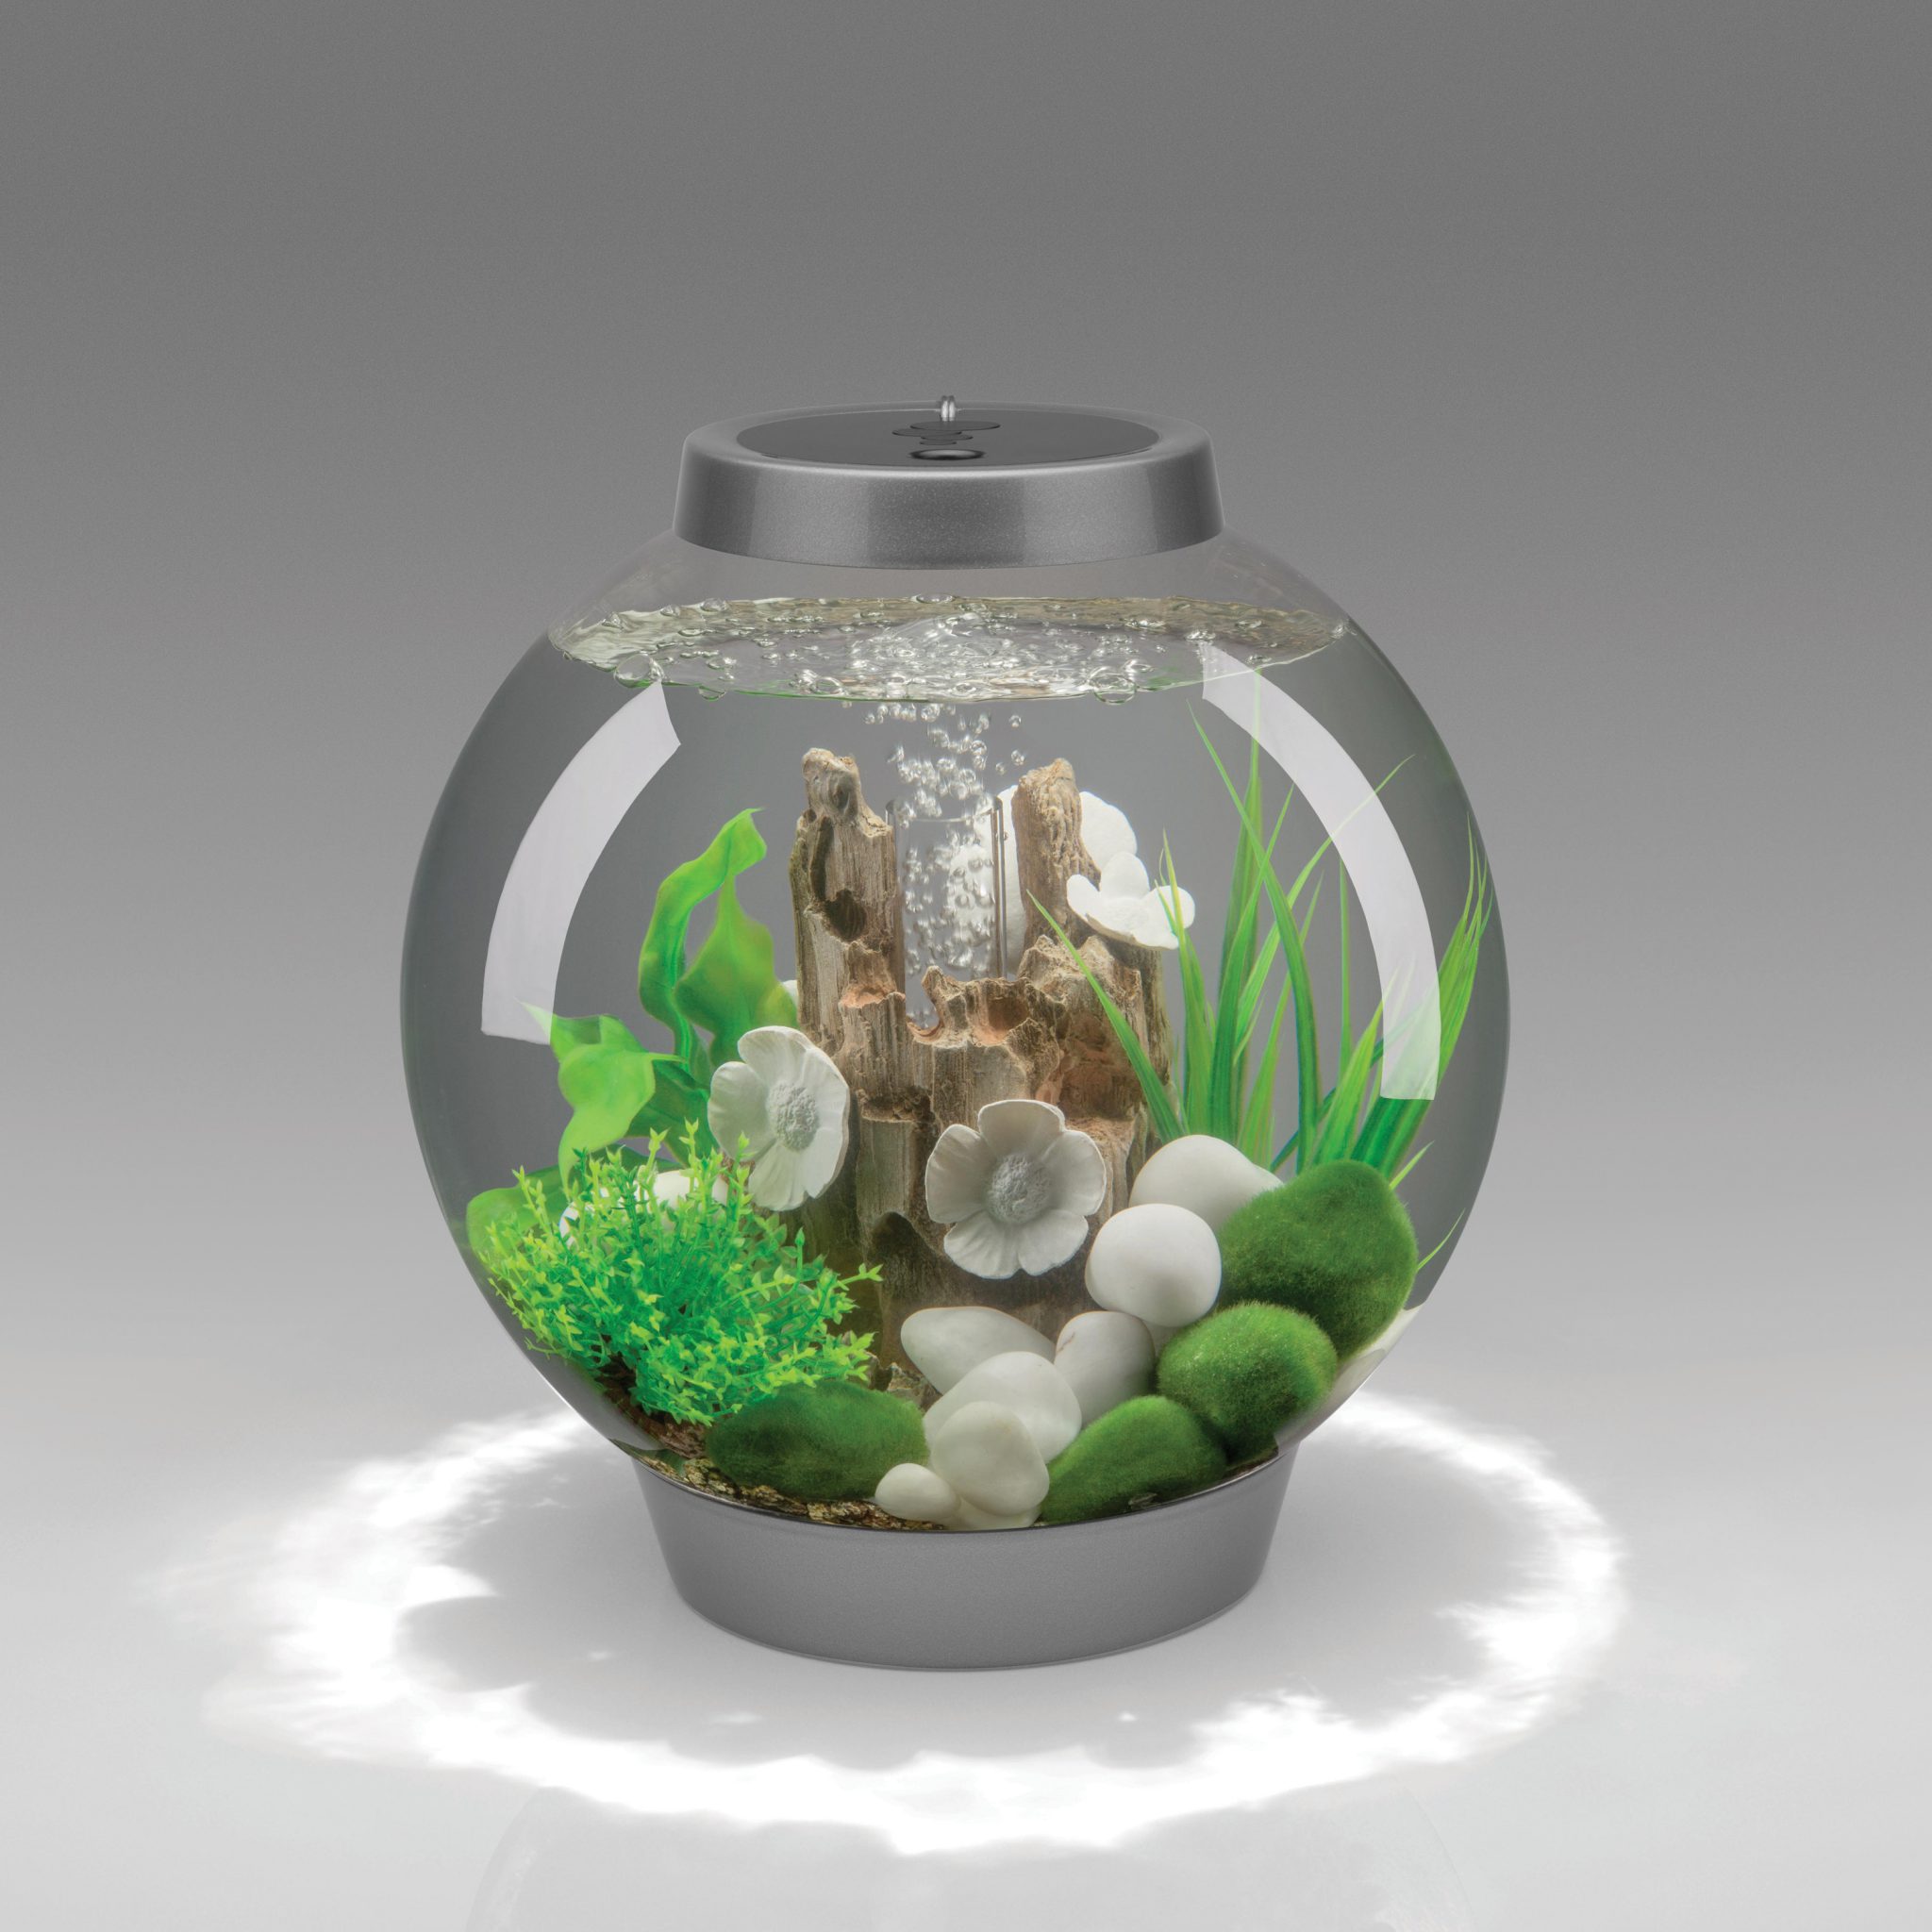 FRCOLOR 15 Pcs Fish Tank Ceramic Ball Ceramic Decor Aquarium